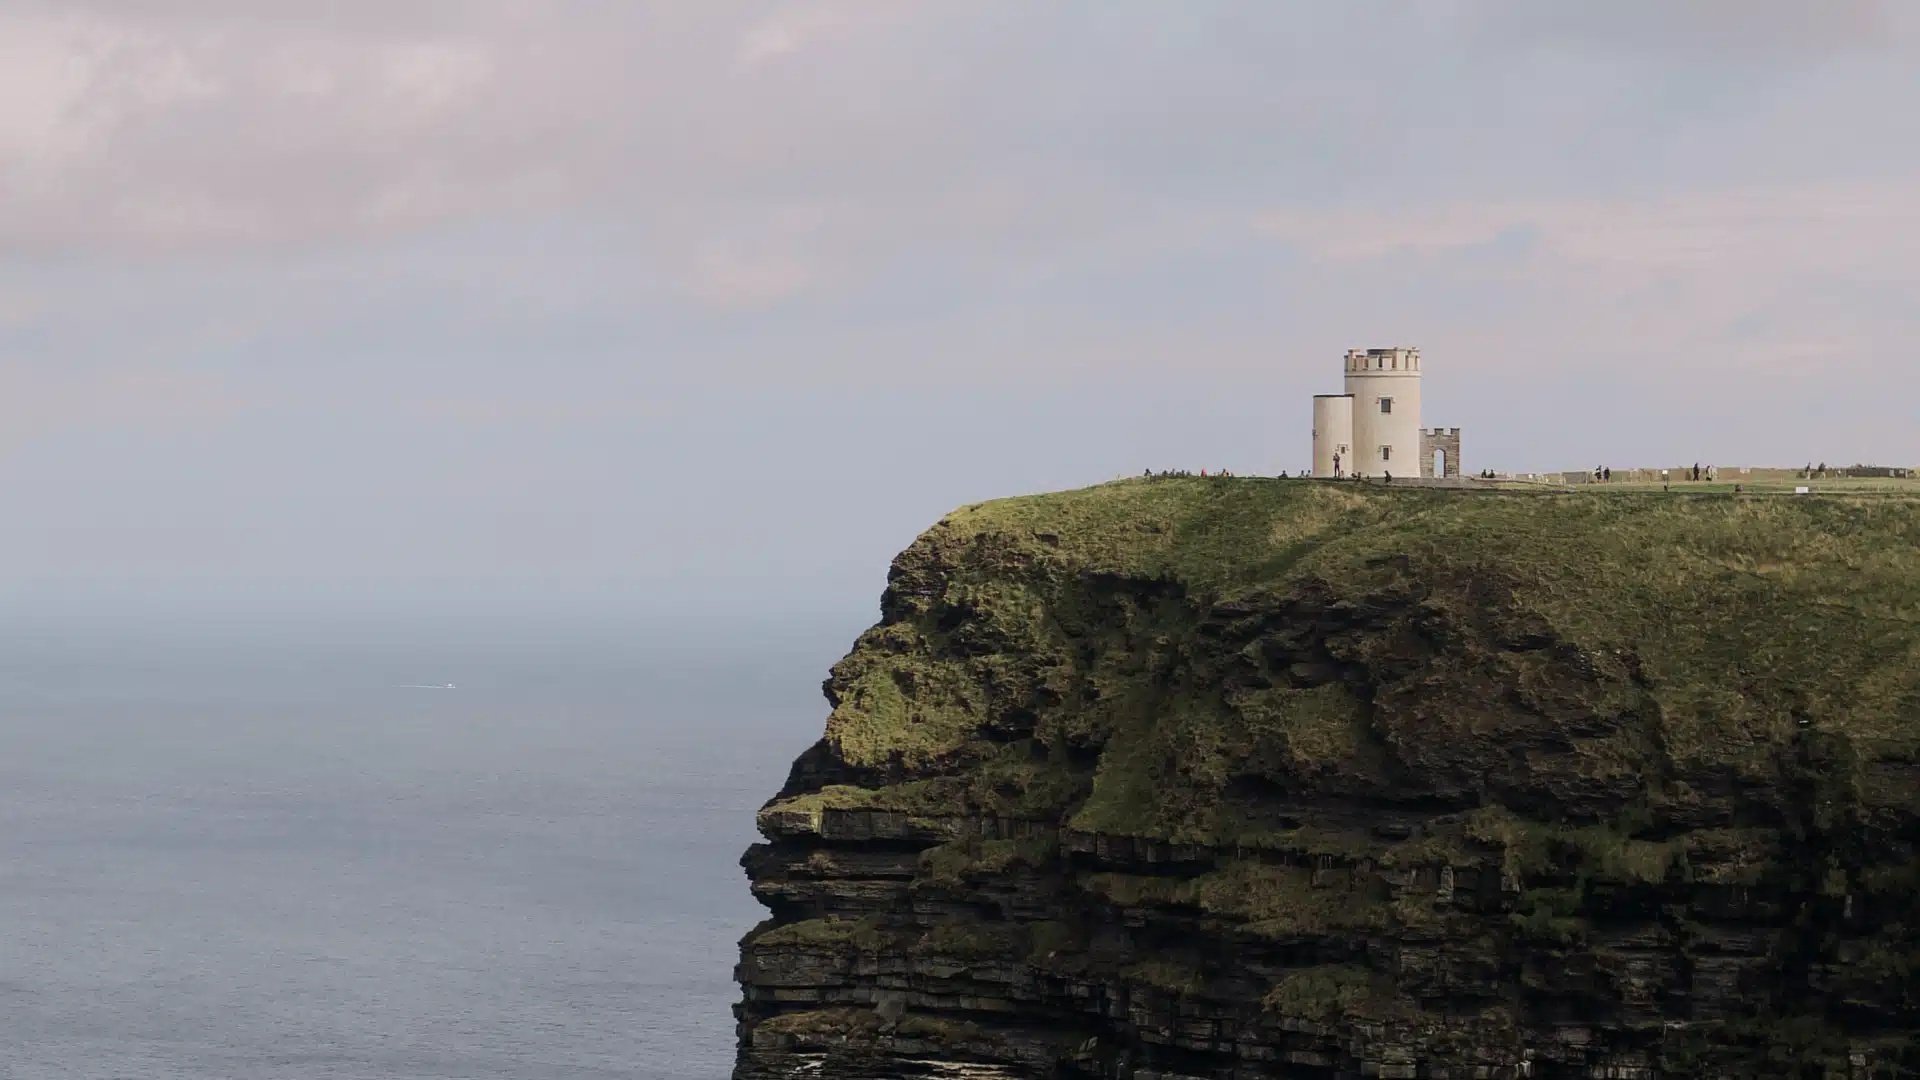 Lighthouse over clift - ireland website created by webbiz